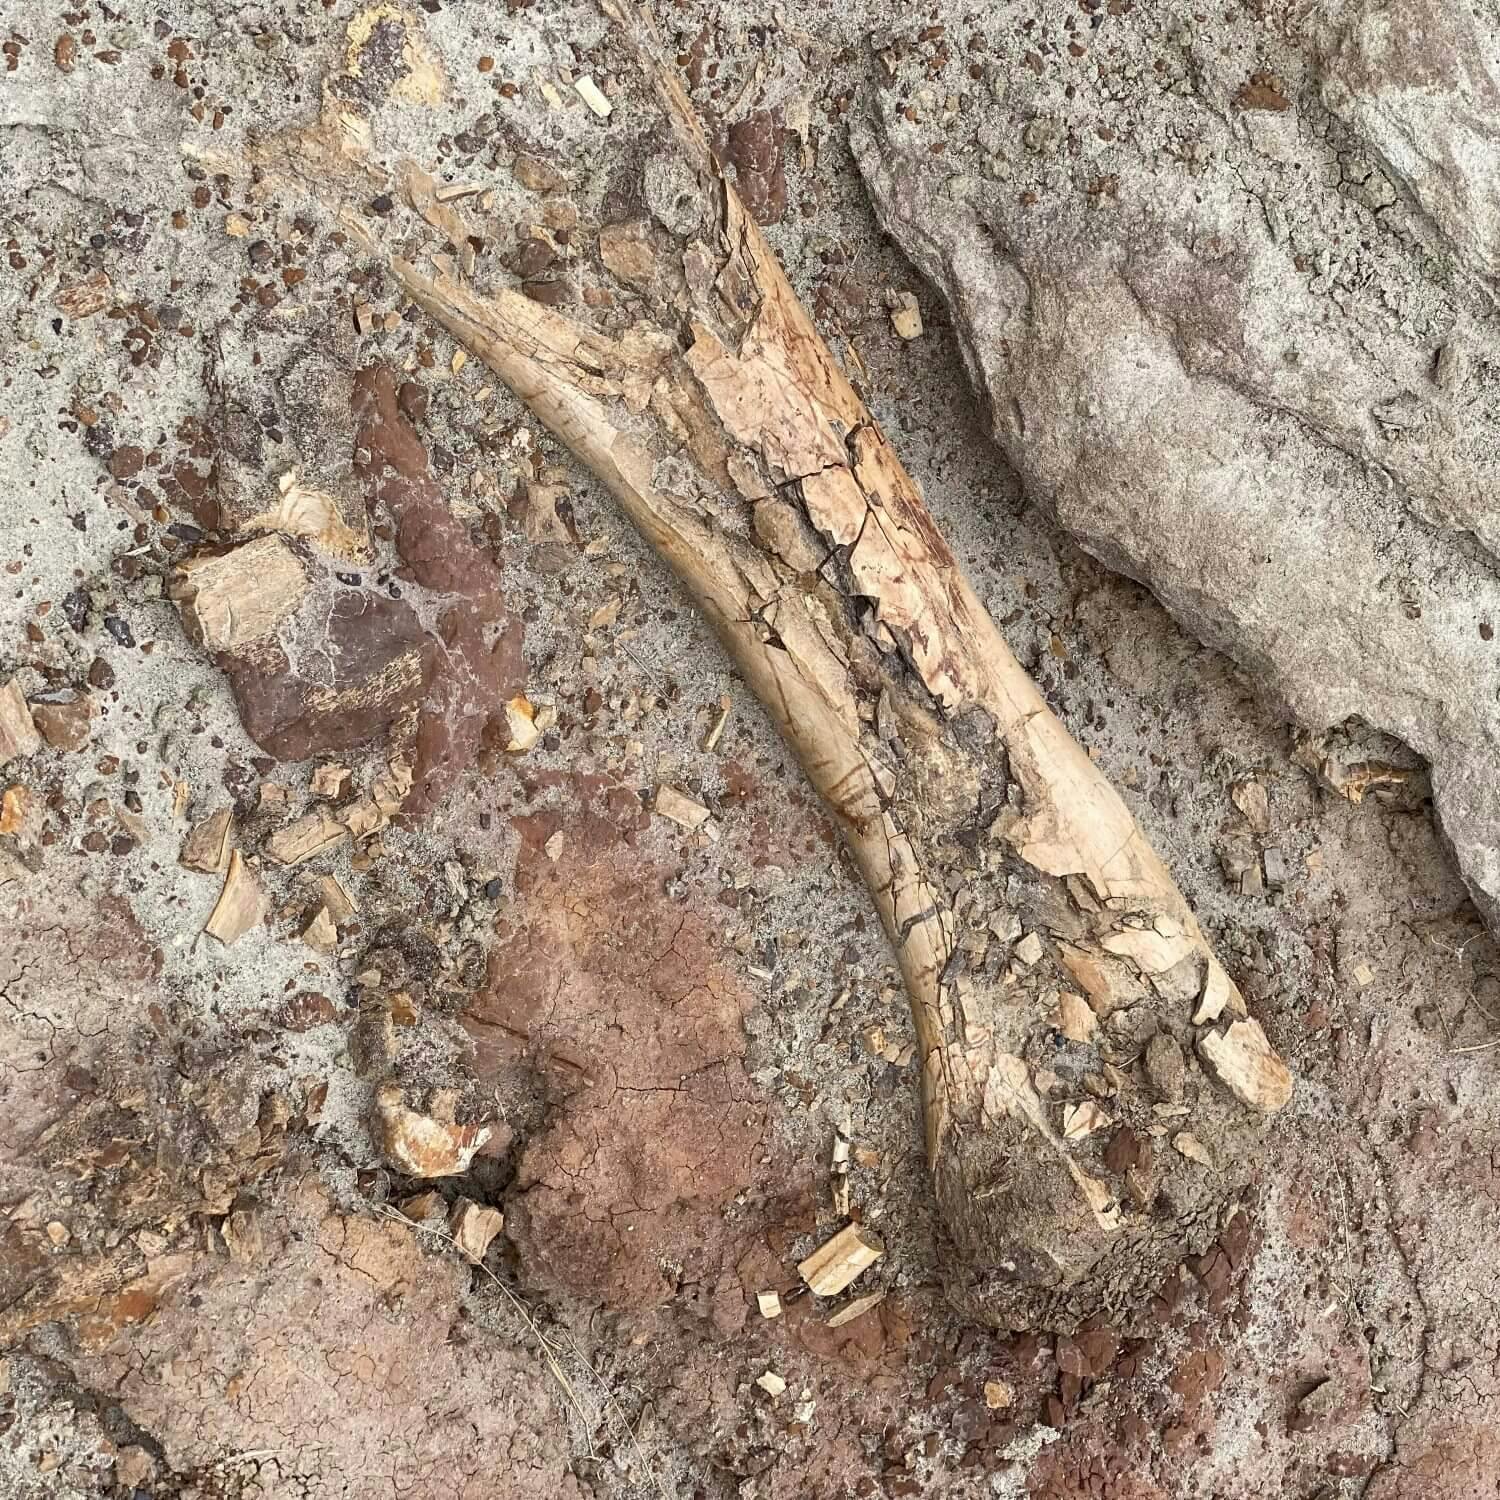 Dinosaur bone, Alberta, Canada